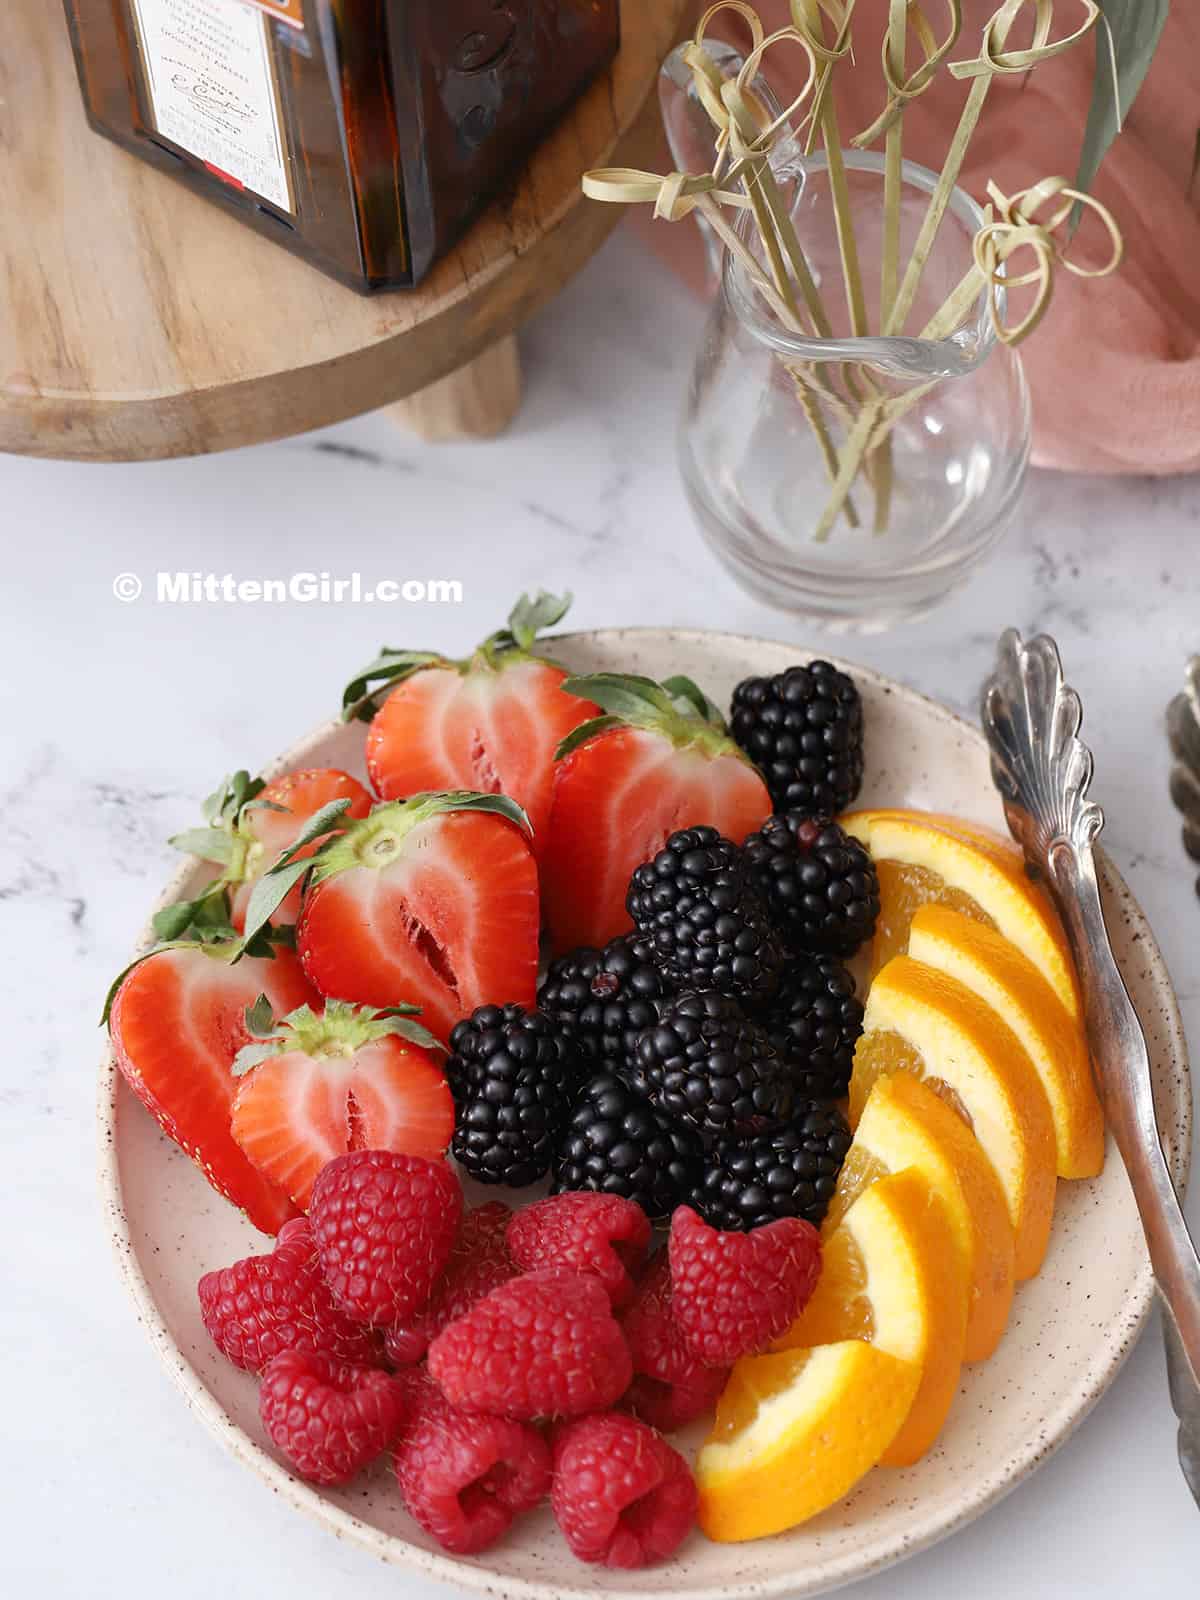 A plate of fruit, sliced up for garnish.